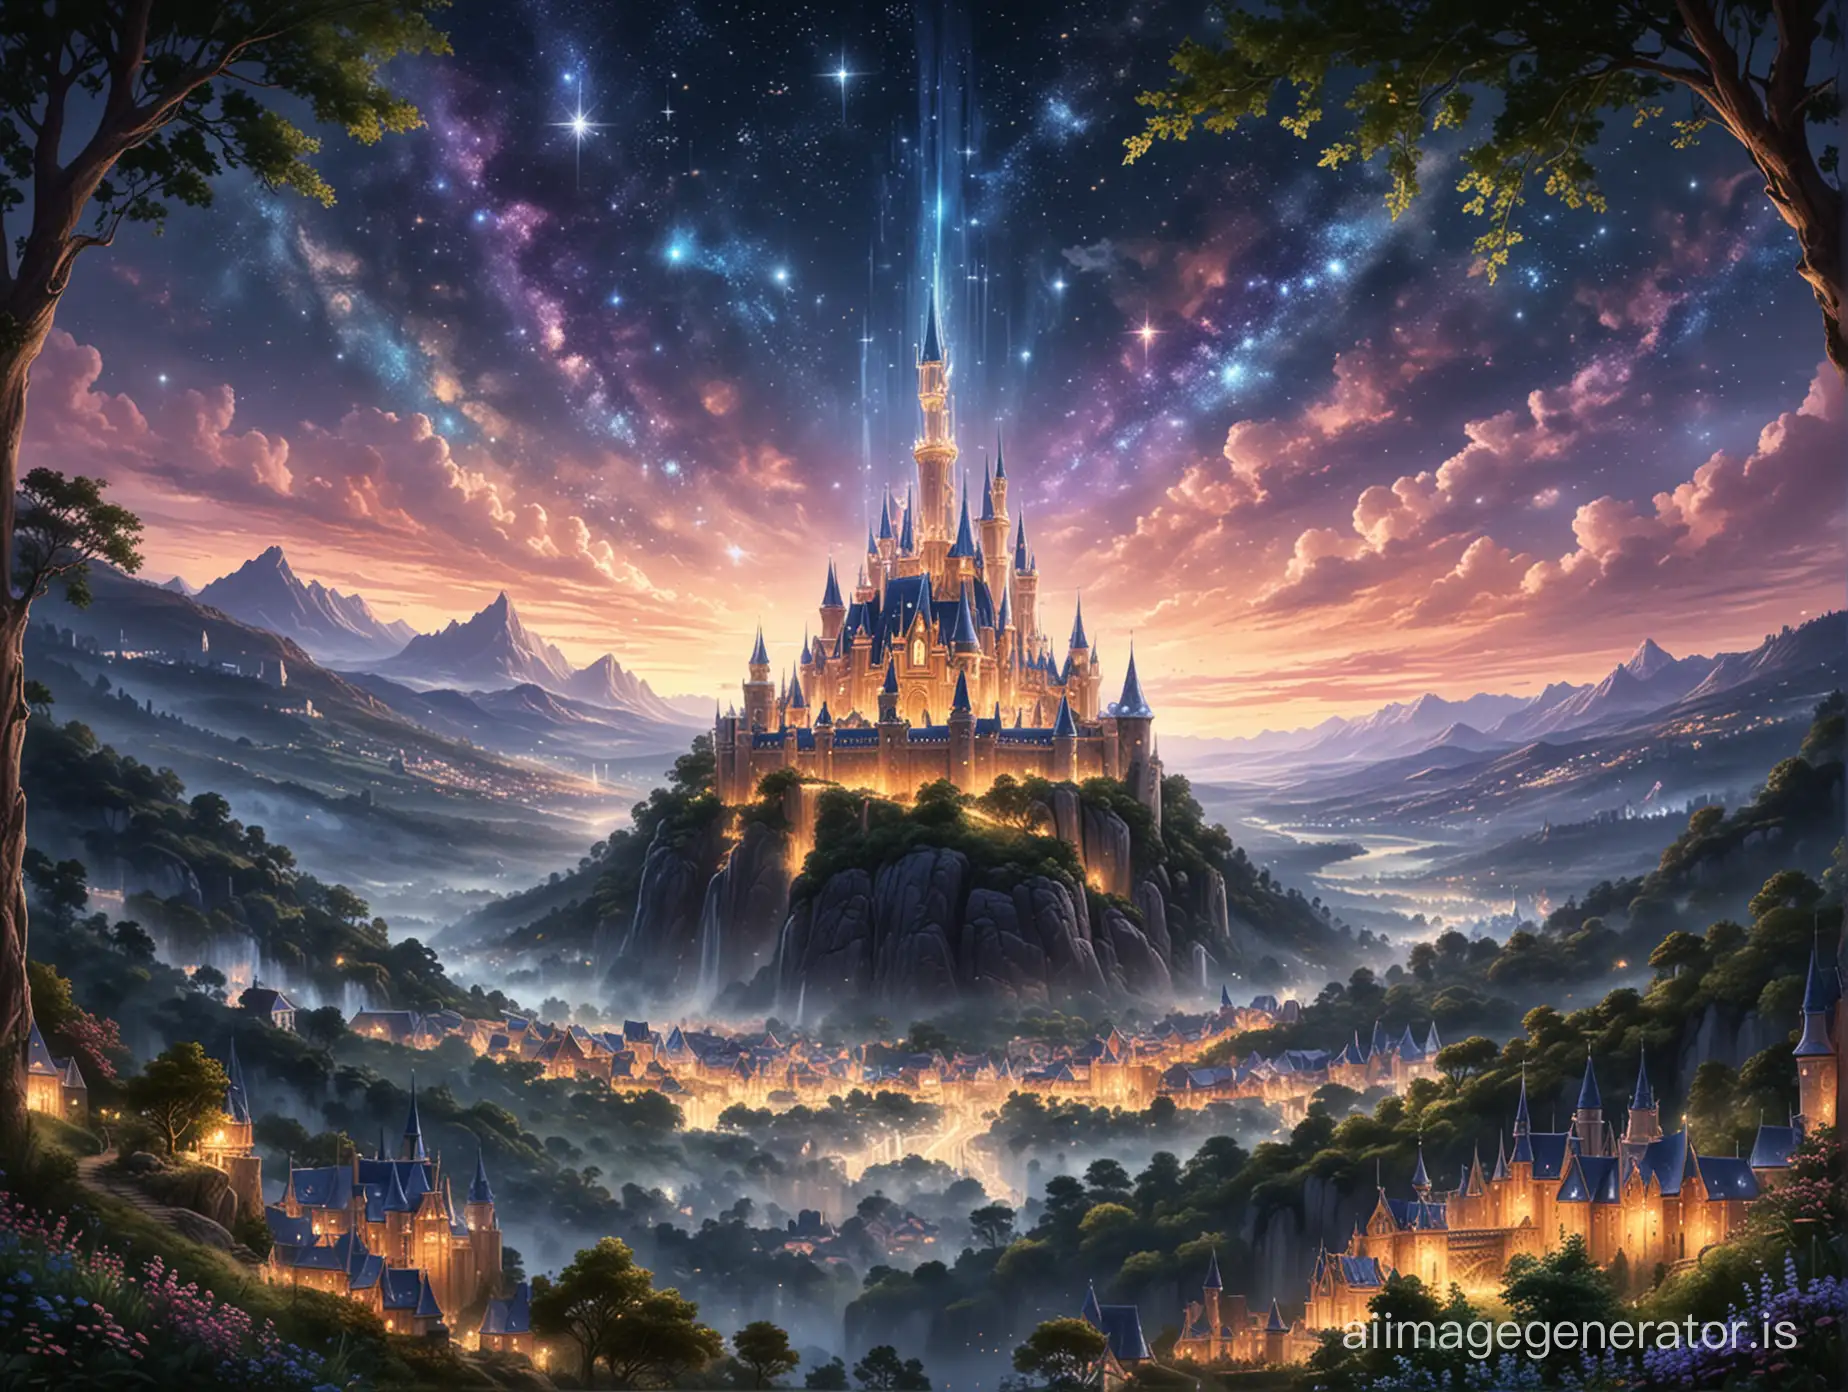 Enchanted-Crystal-Kingdom-Under-Starlit-Sky